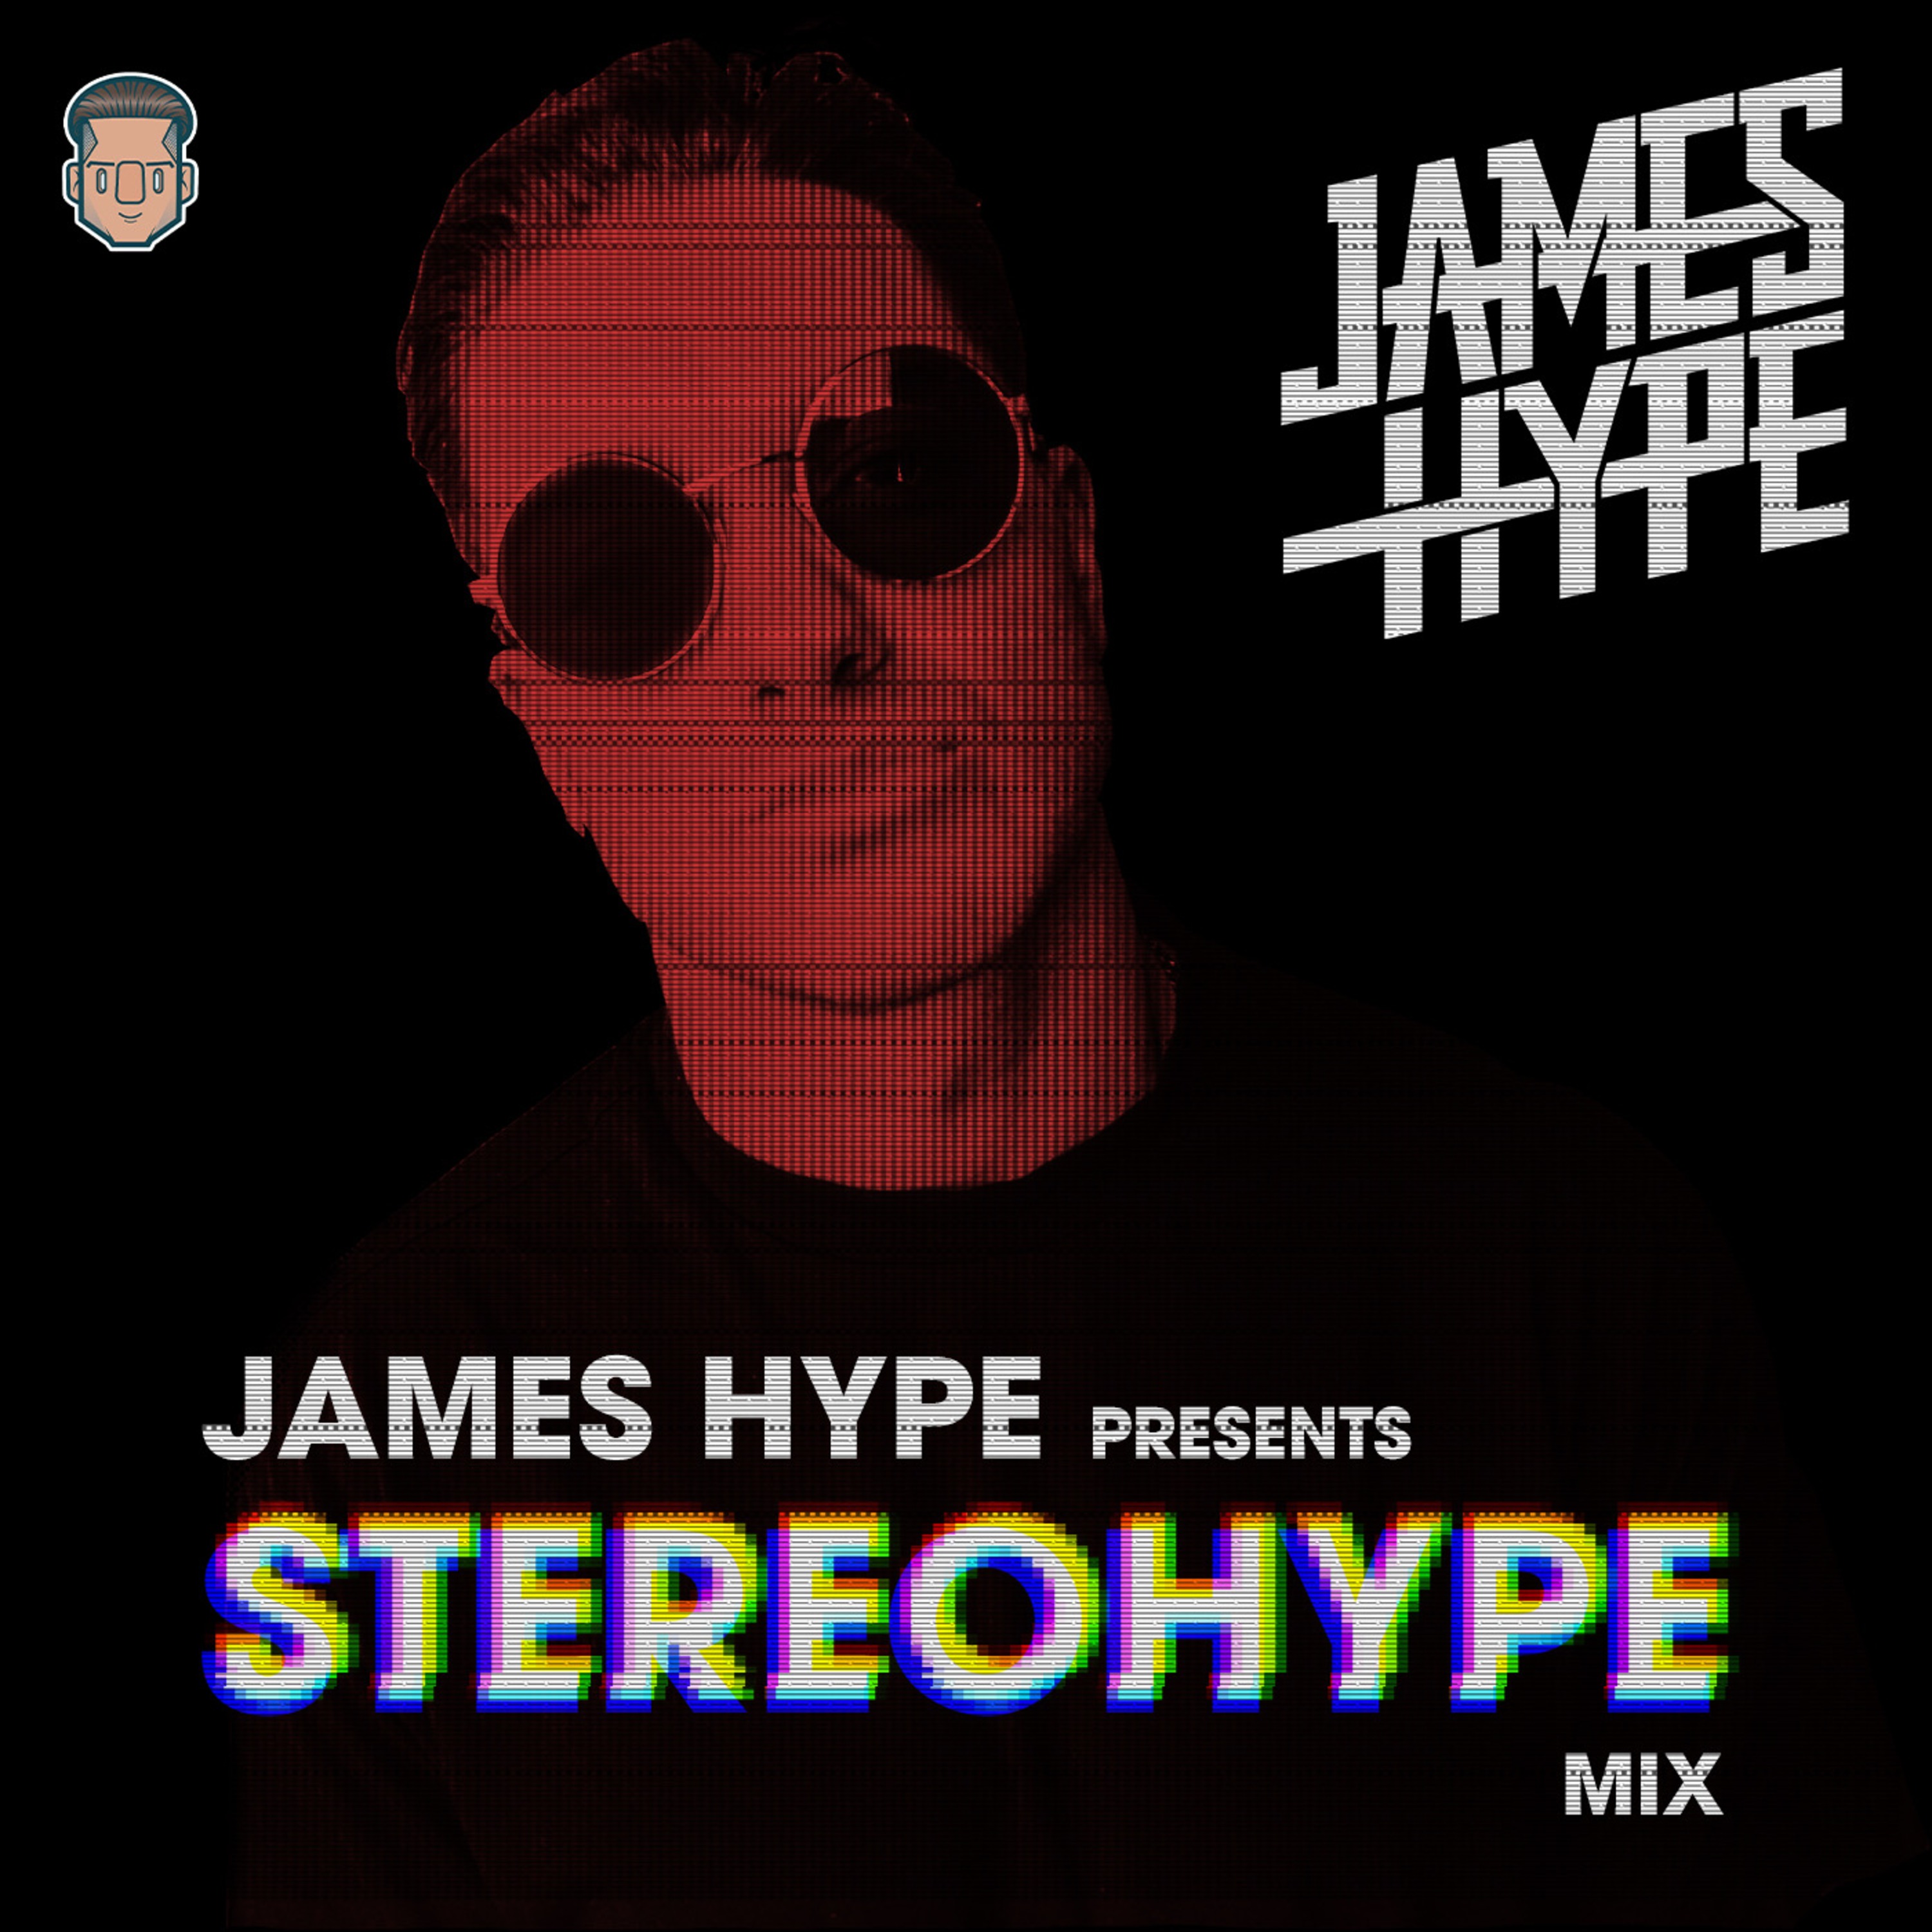 Hype mix. James Hype. Fisher диджей. James Hype британский диджей. James Hype Ferrari обложка.